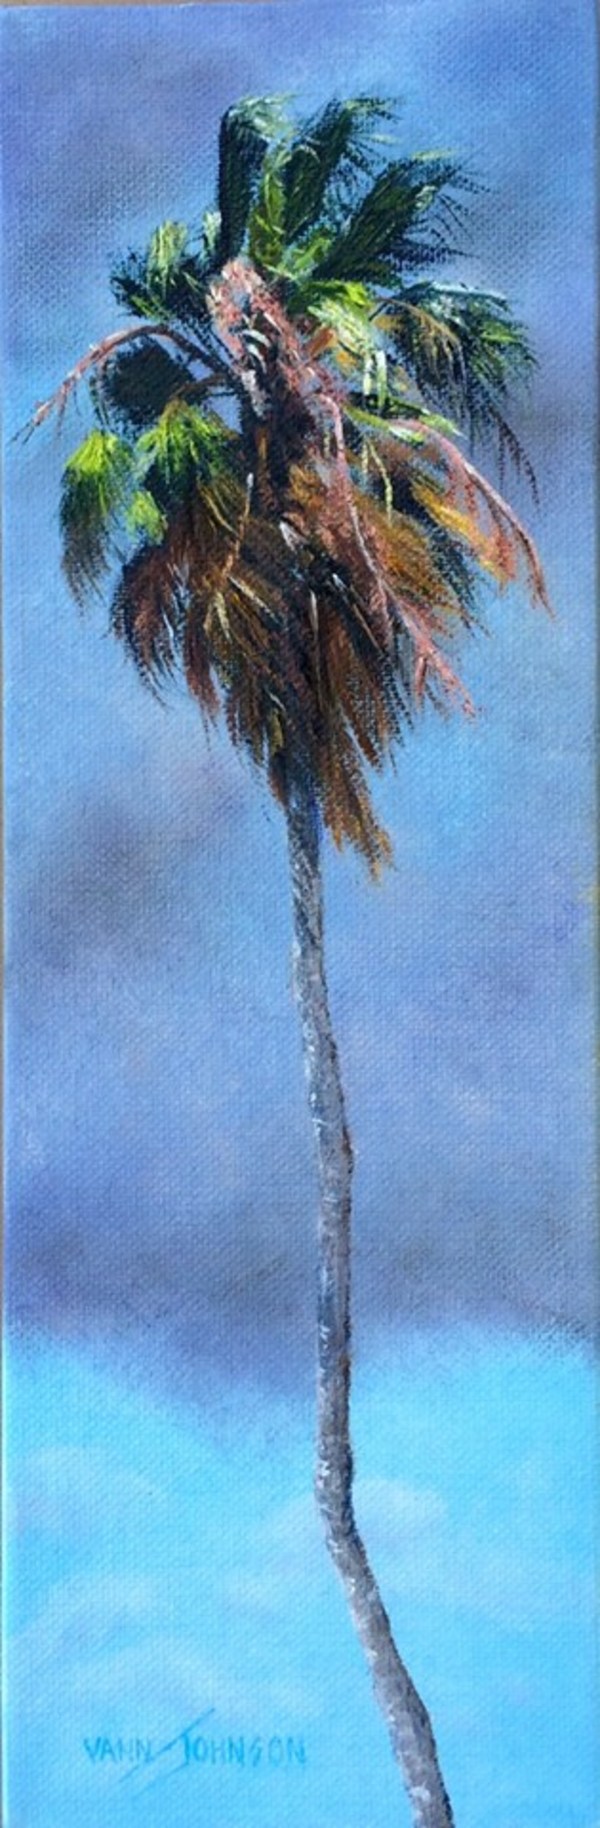 Stormy Palm 5 by Wendi Vann Johnson